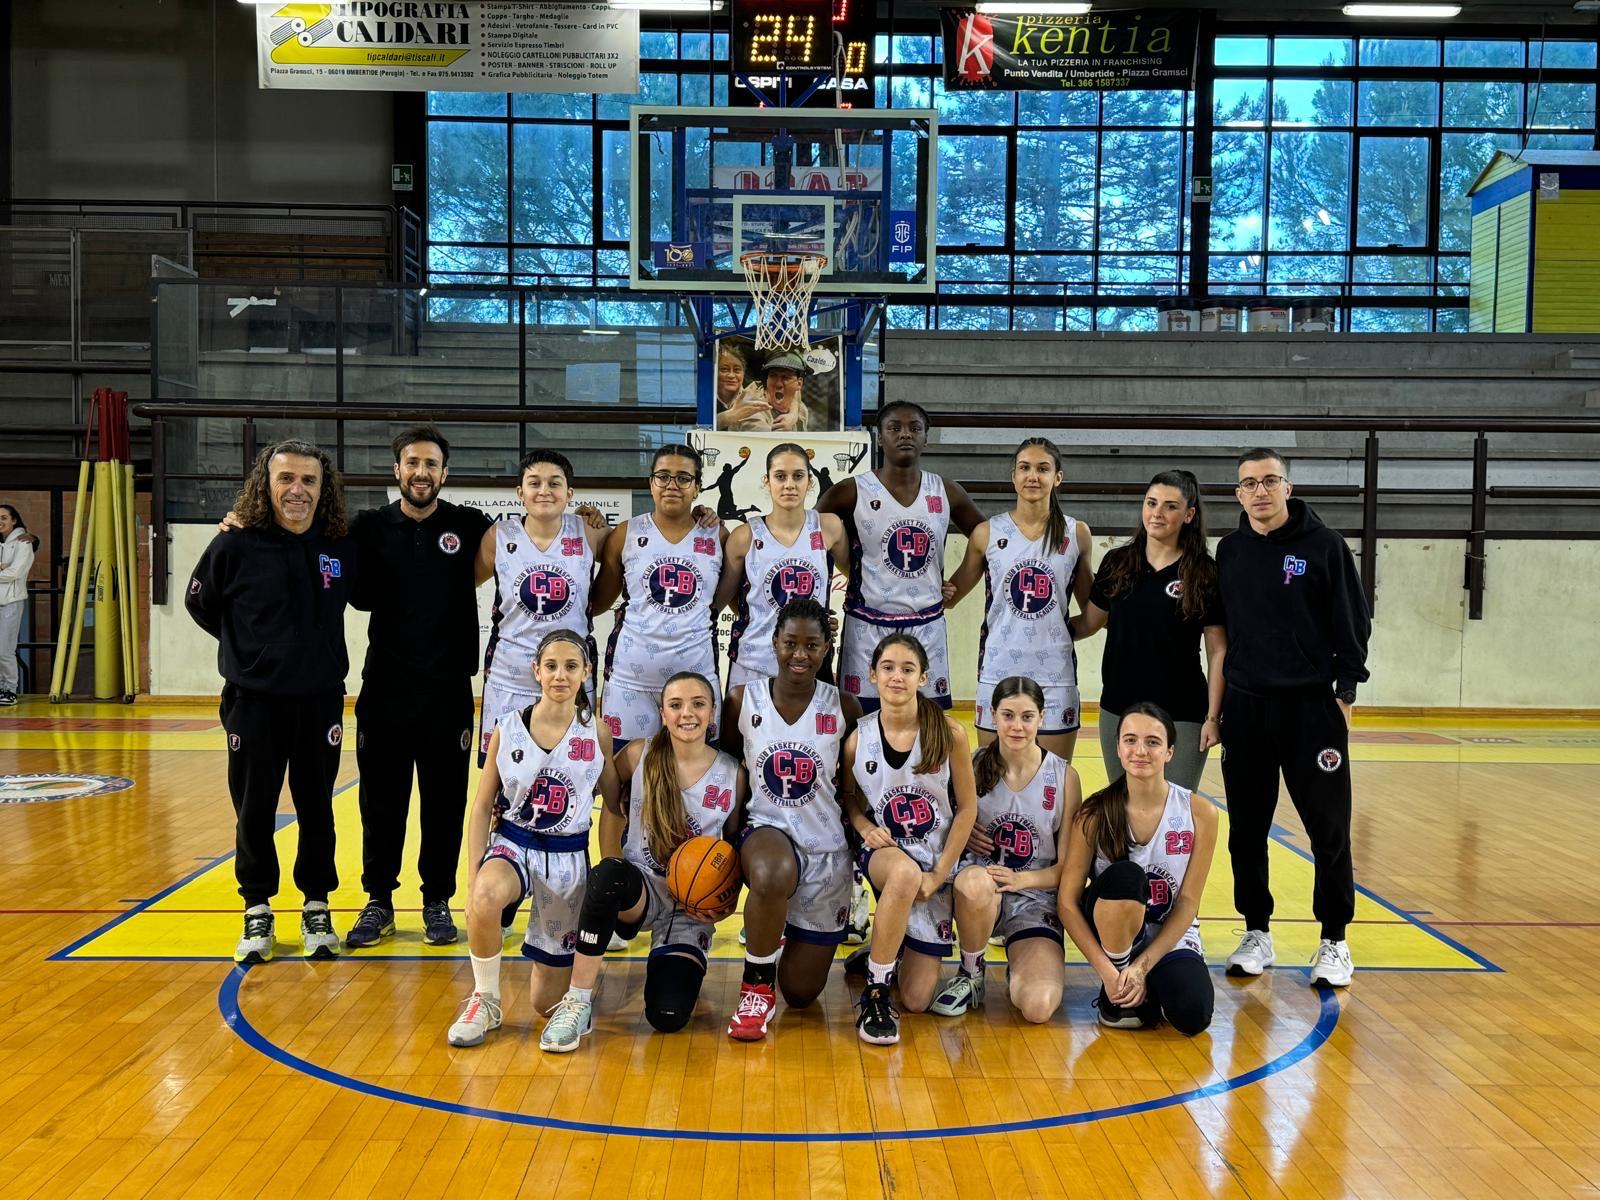 Club Basket Frascati settore giovanile